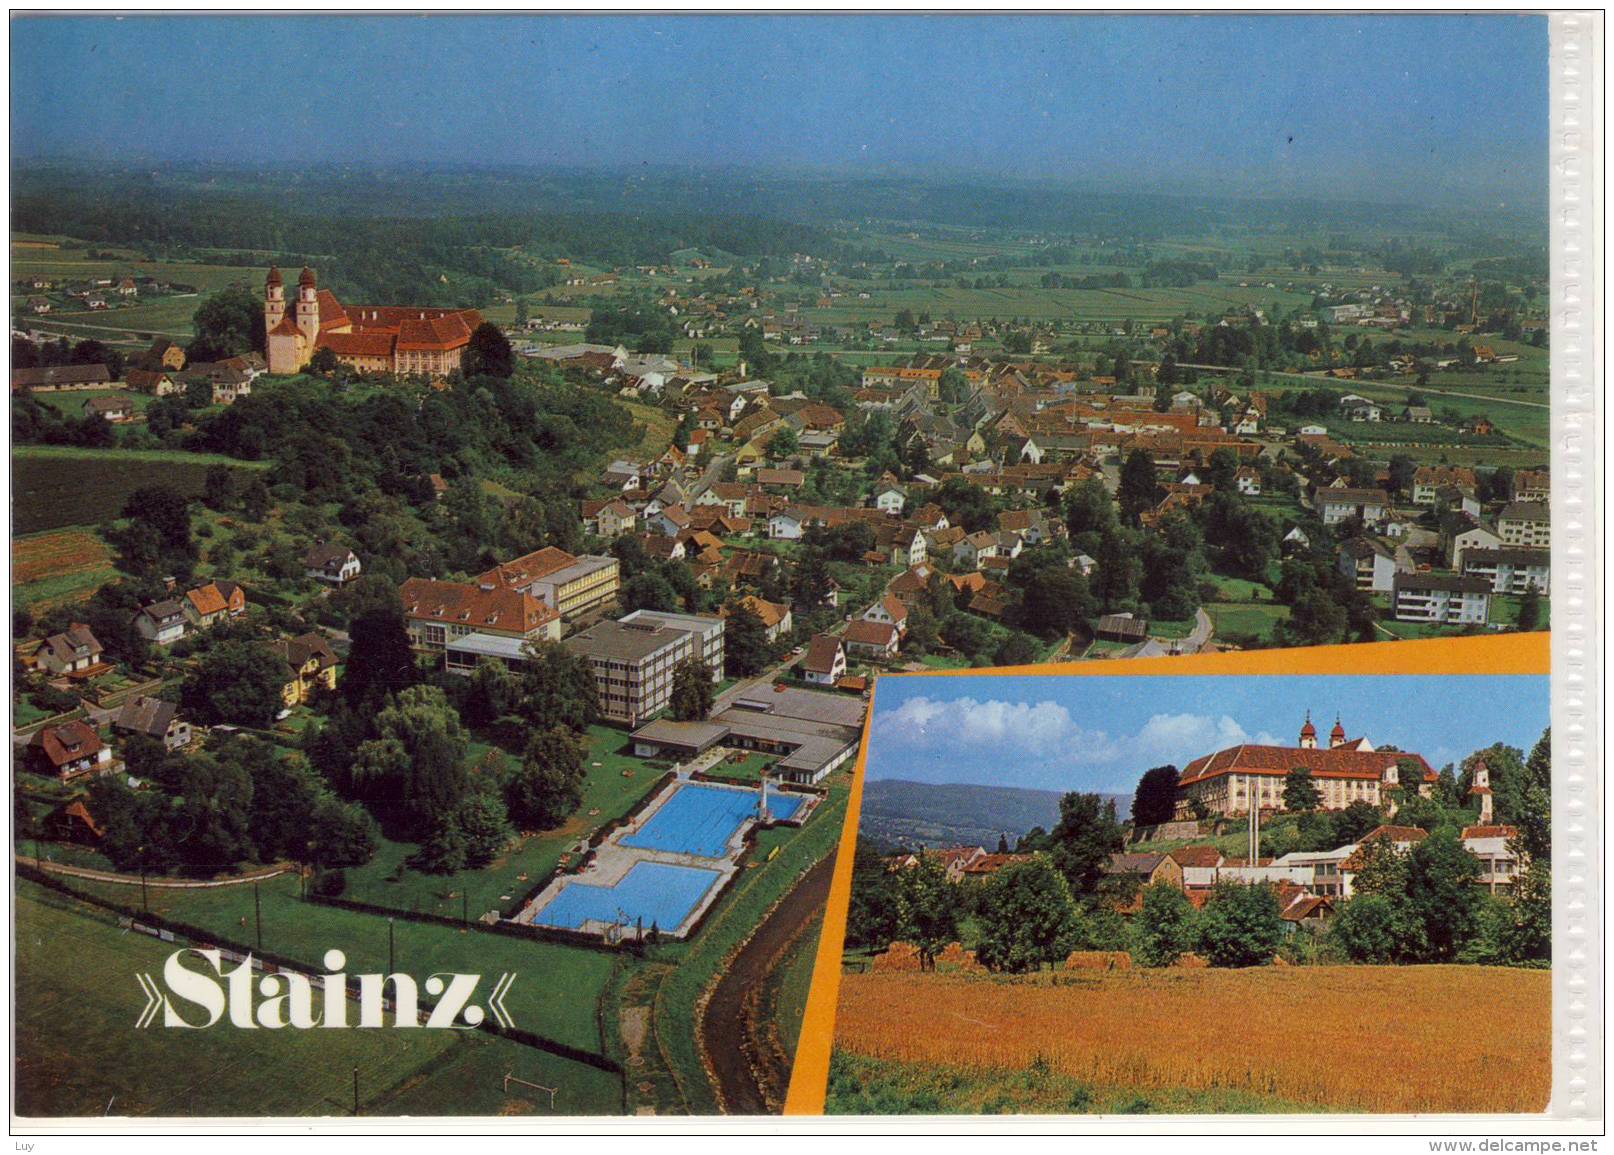 STAINZ - Luftbild, Flugaufnahme, Panorama - Stainz